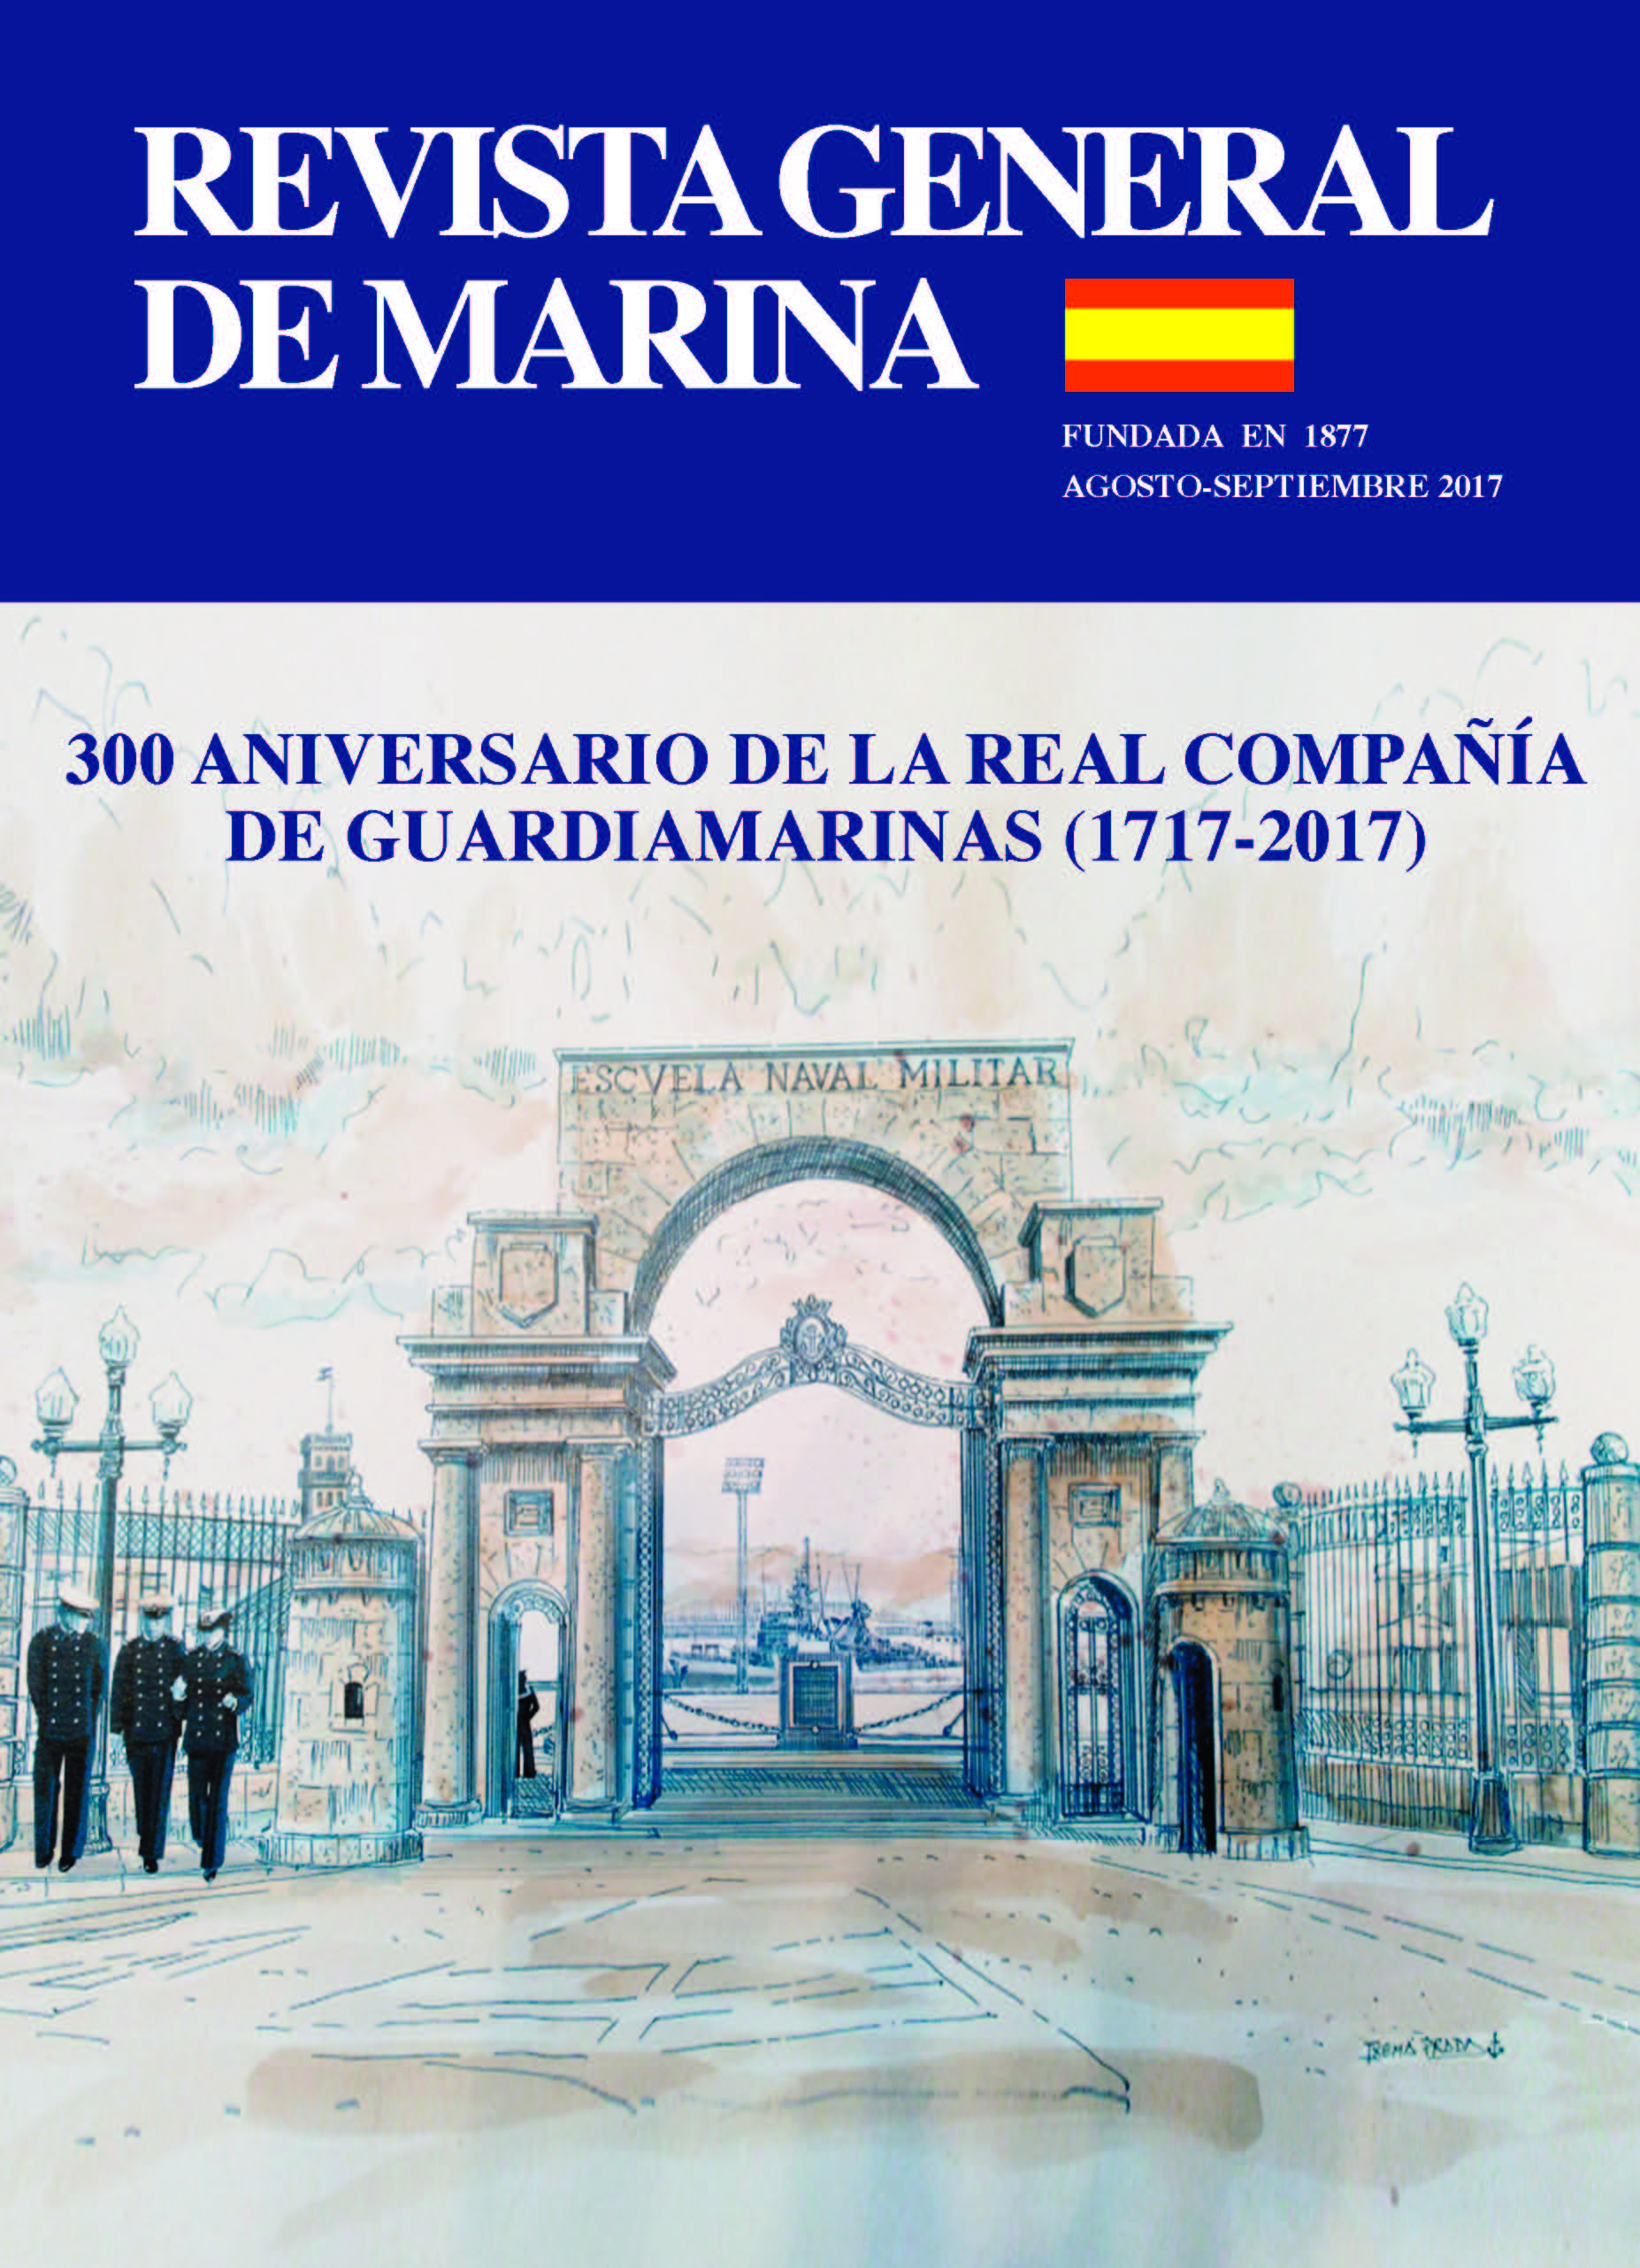 Revista General de Marina Agosto-Septiembre 2017